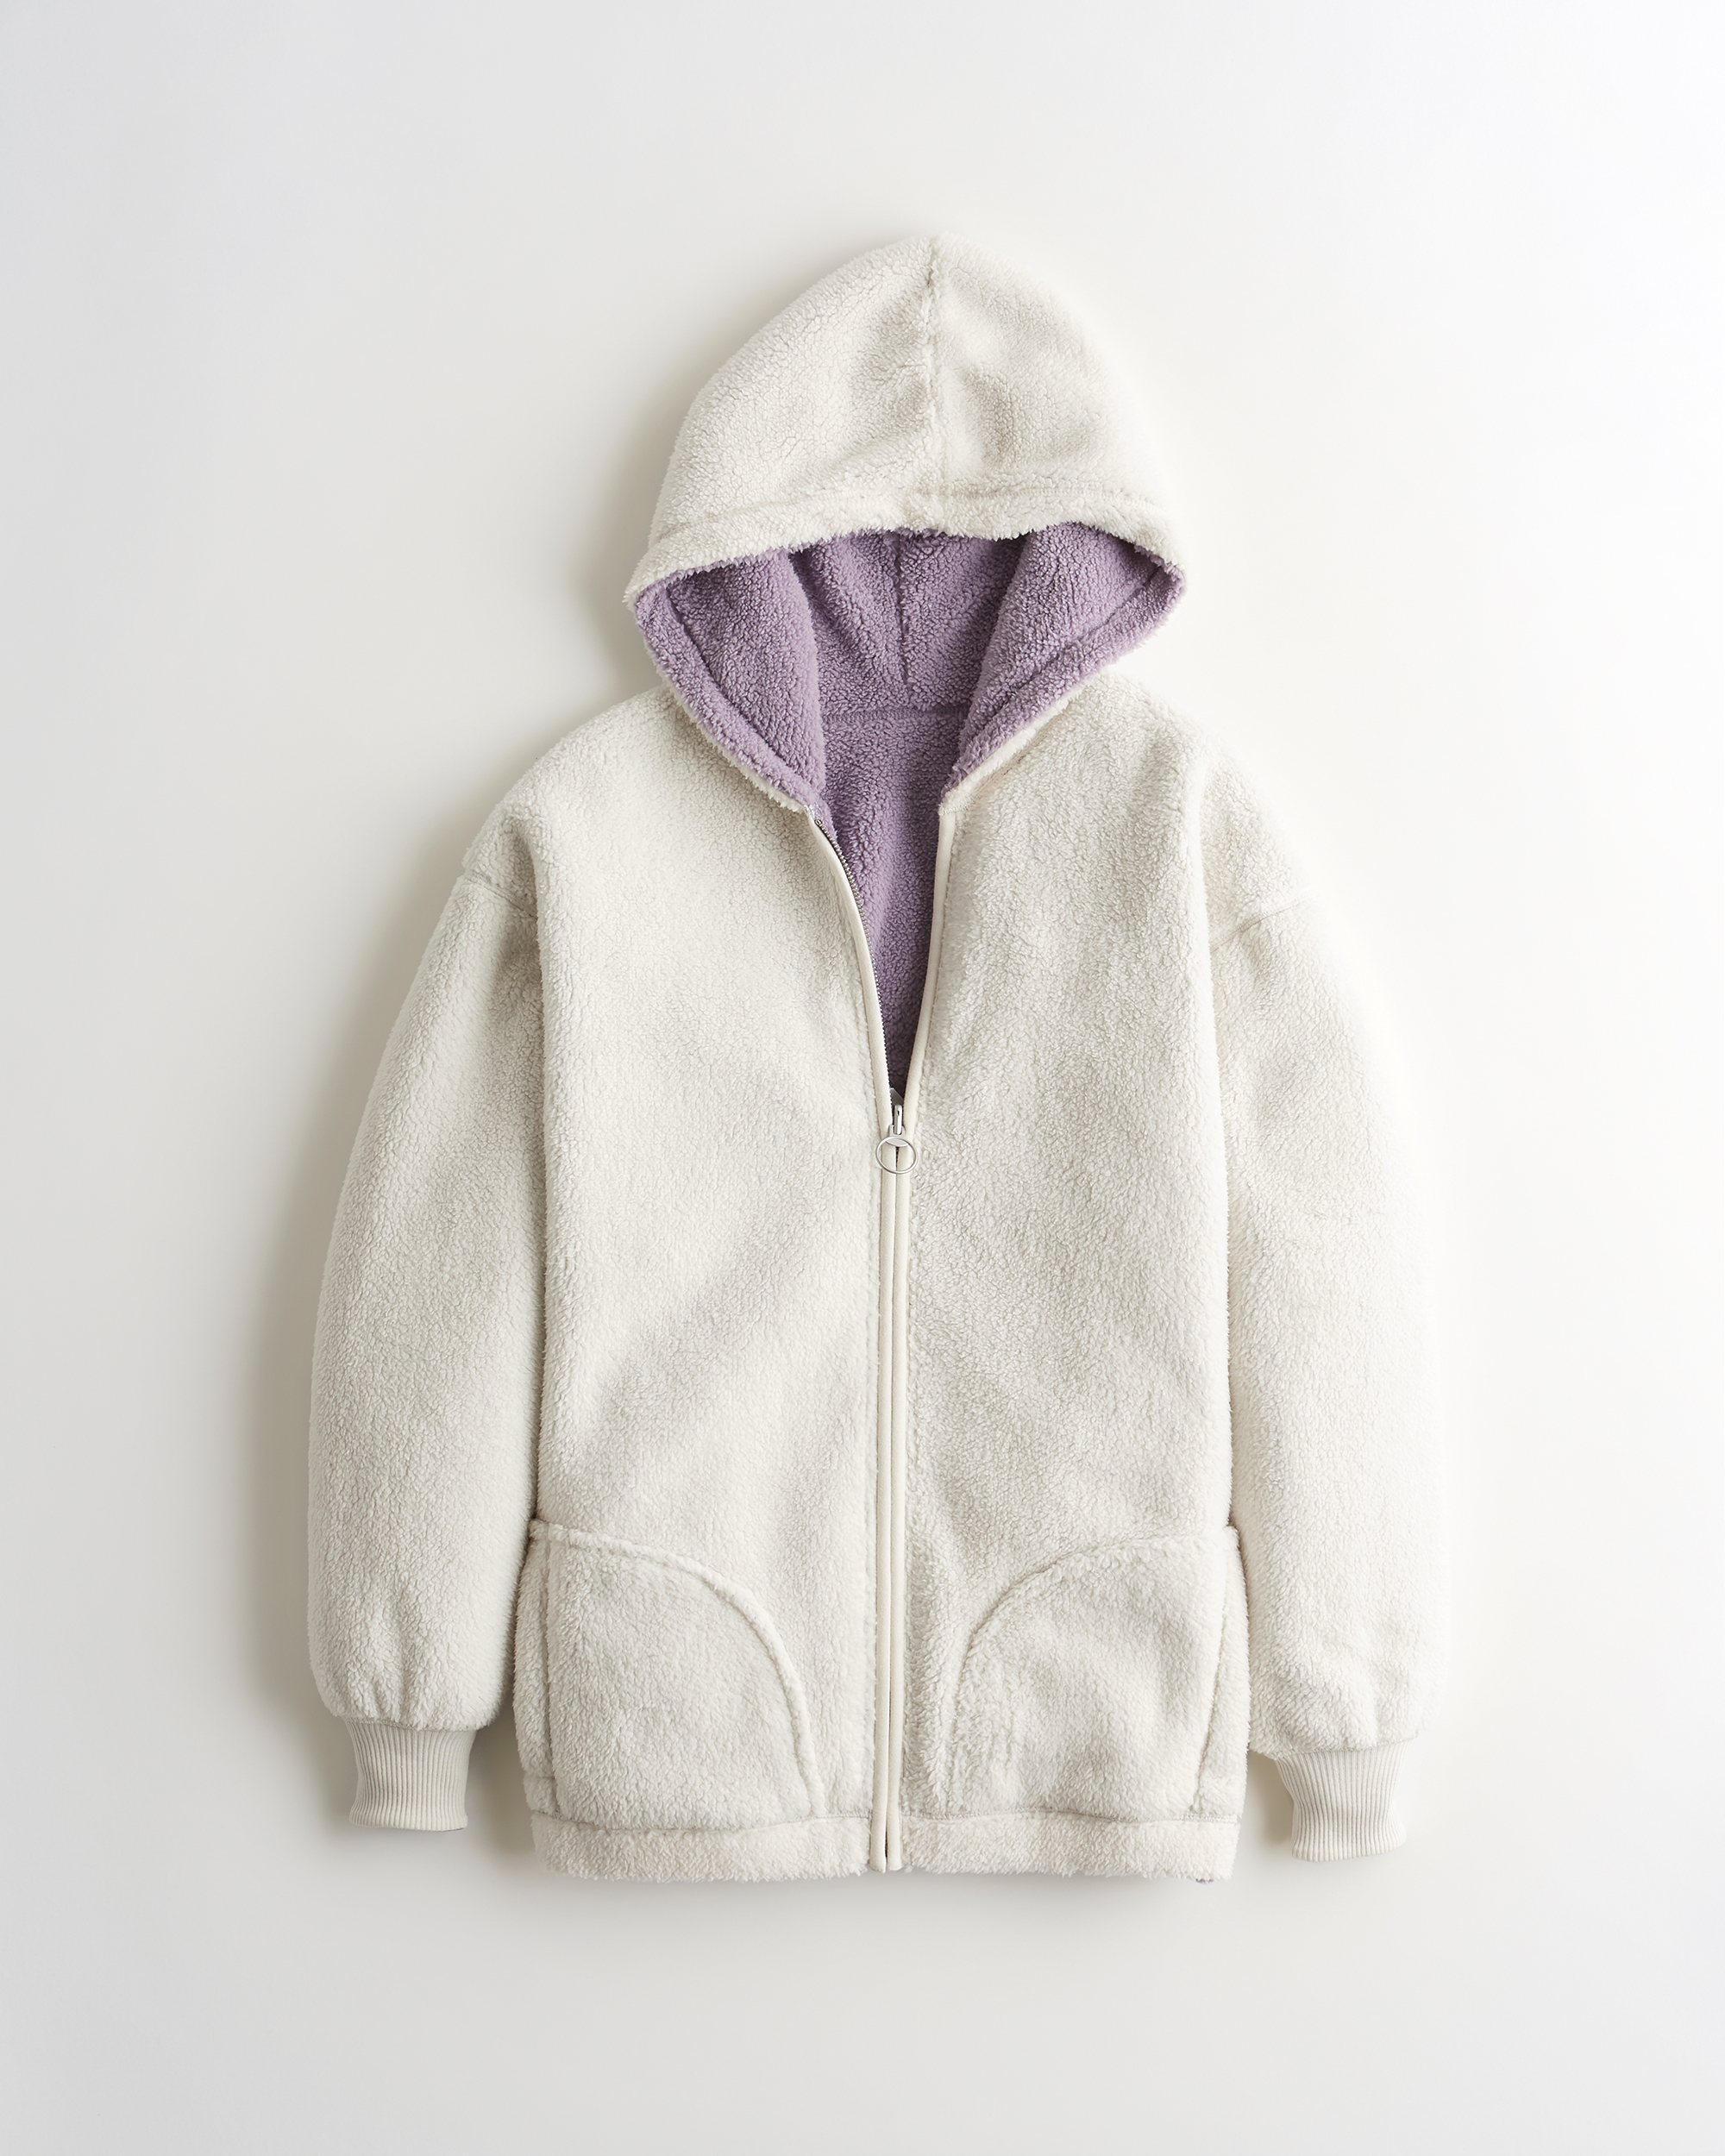 hollister purple hoodie